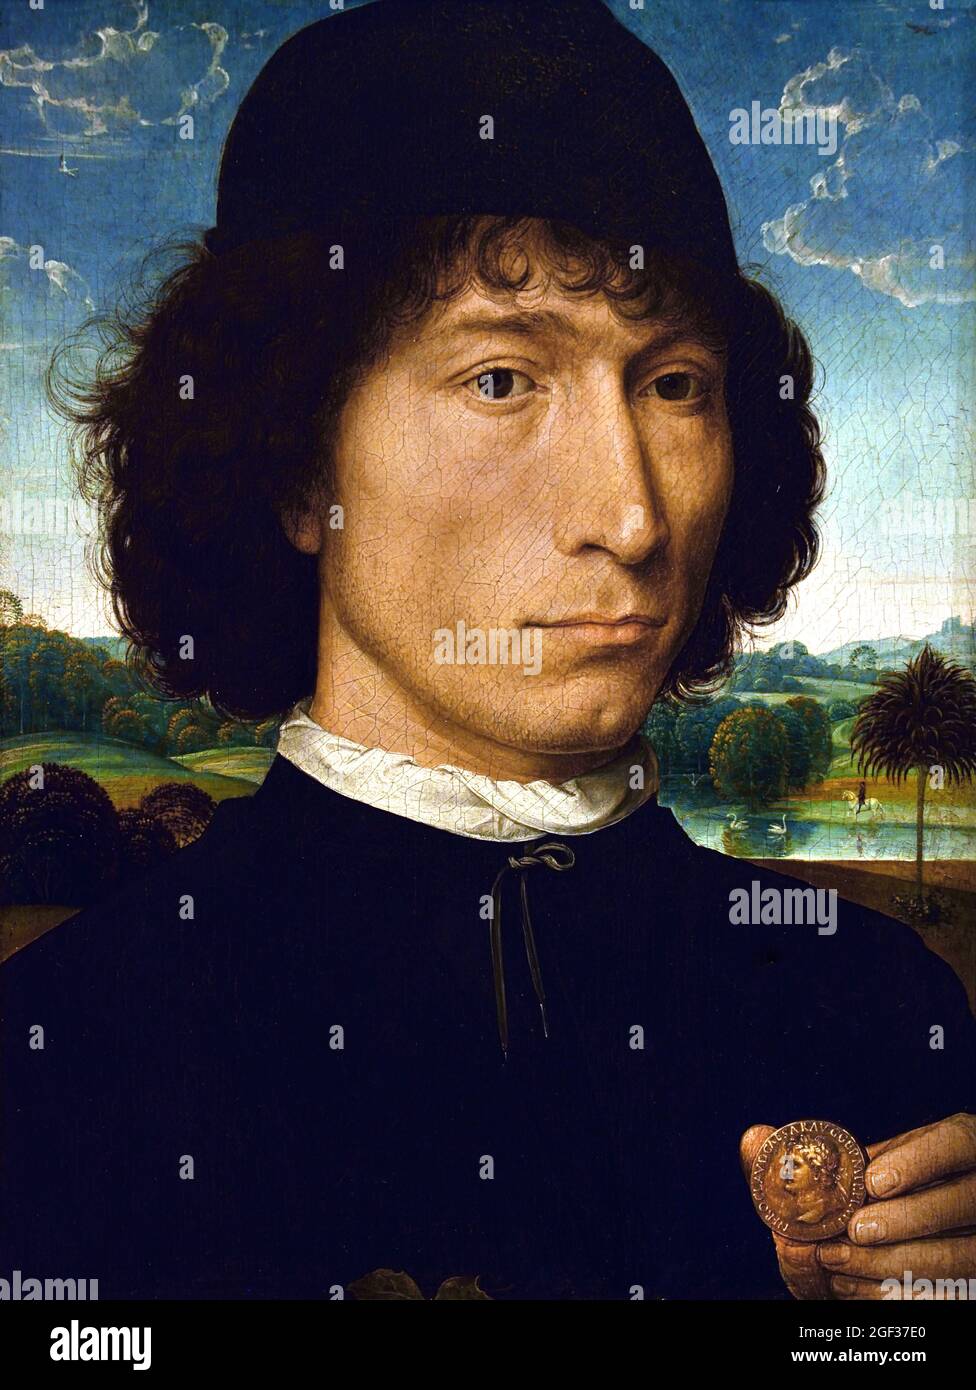 The Portrait of a Man with a Roman Medal 1480 Oil on panel 31 cm × 23.2 cm German-born Flemish artist Hans Memling 1439-1494 German, Germany, Belgian, Belgium, Flemish, Stock Photo